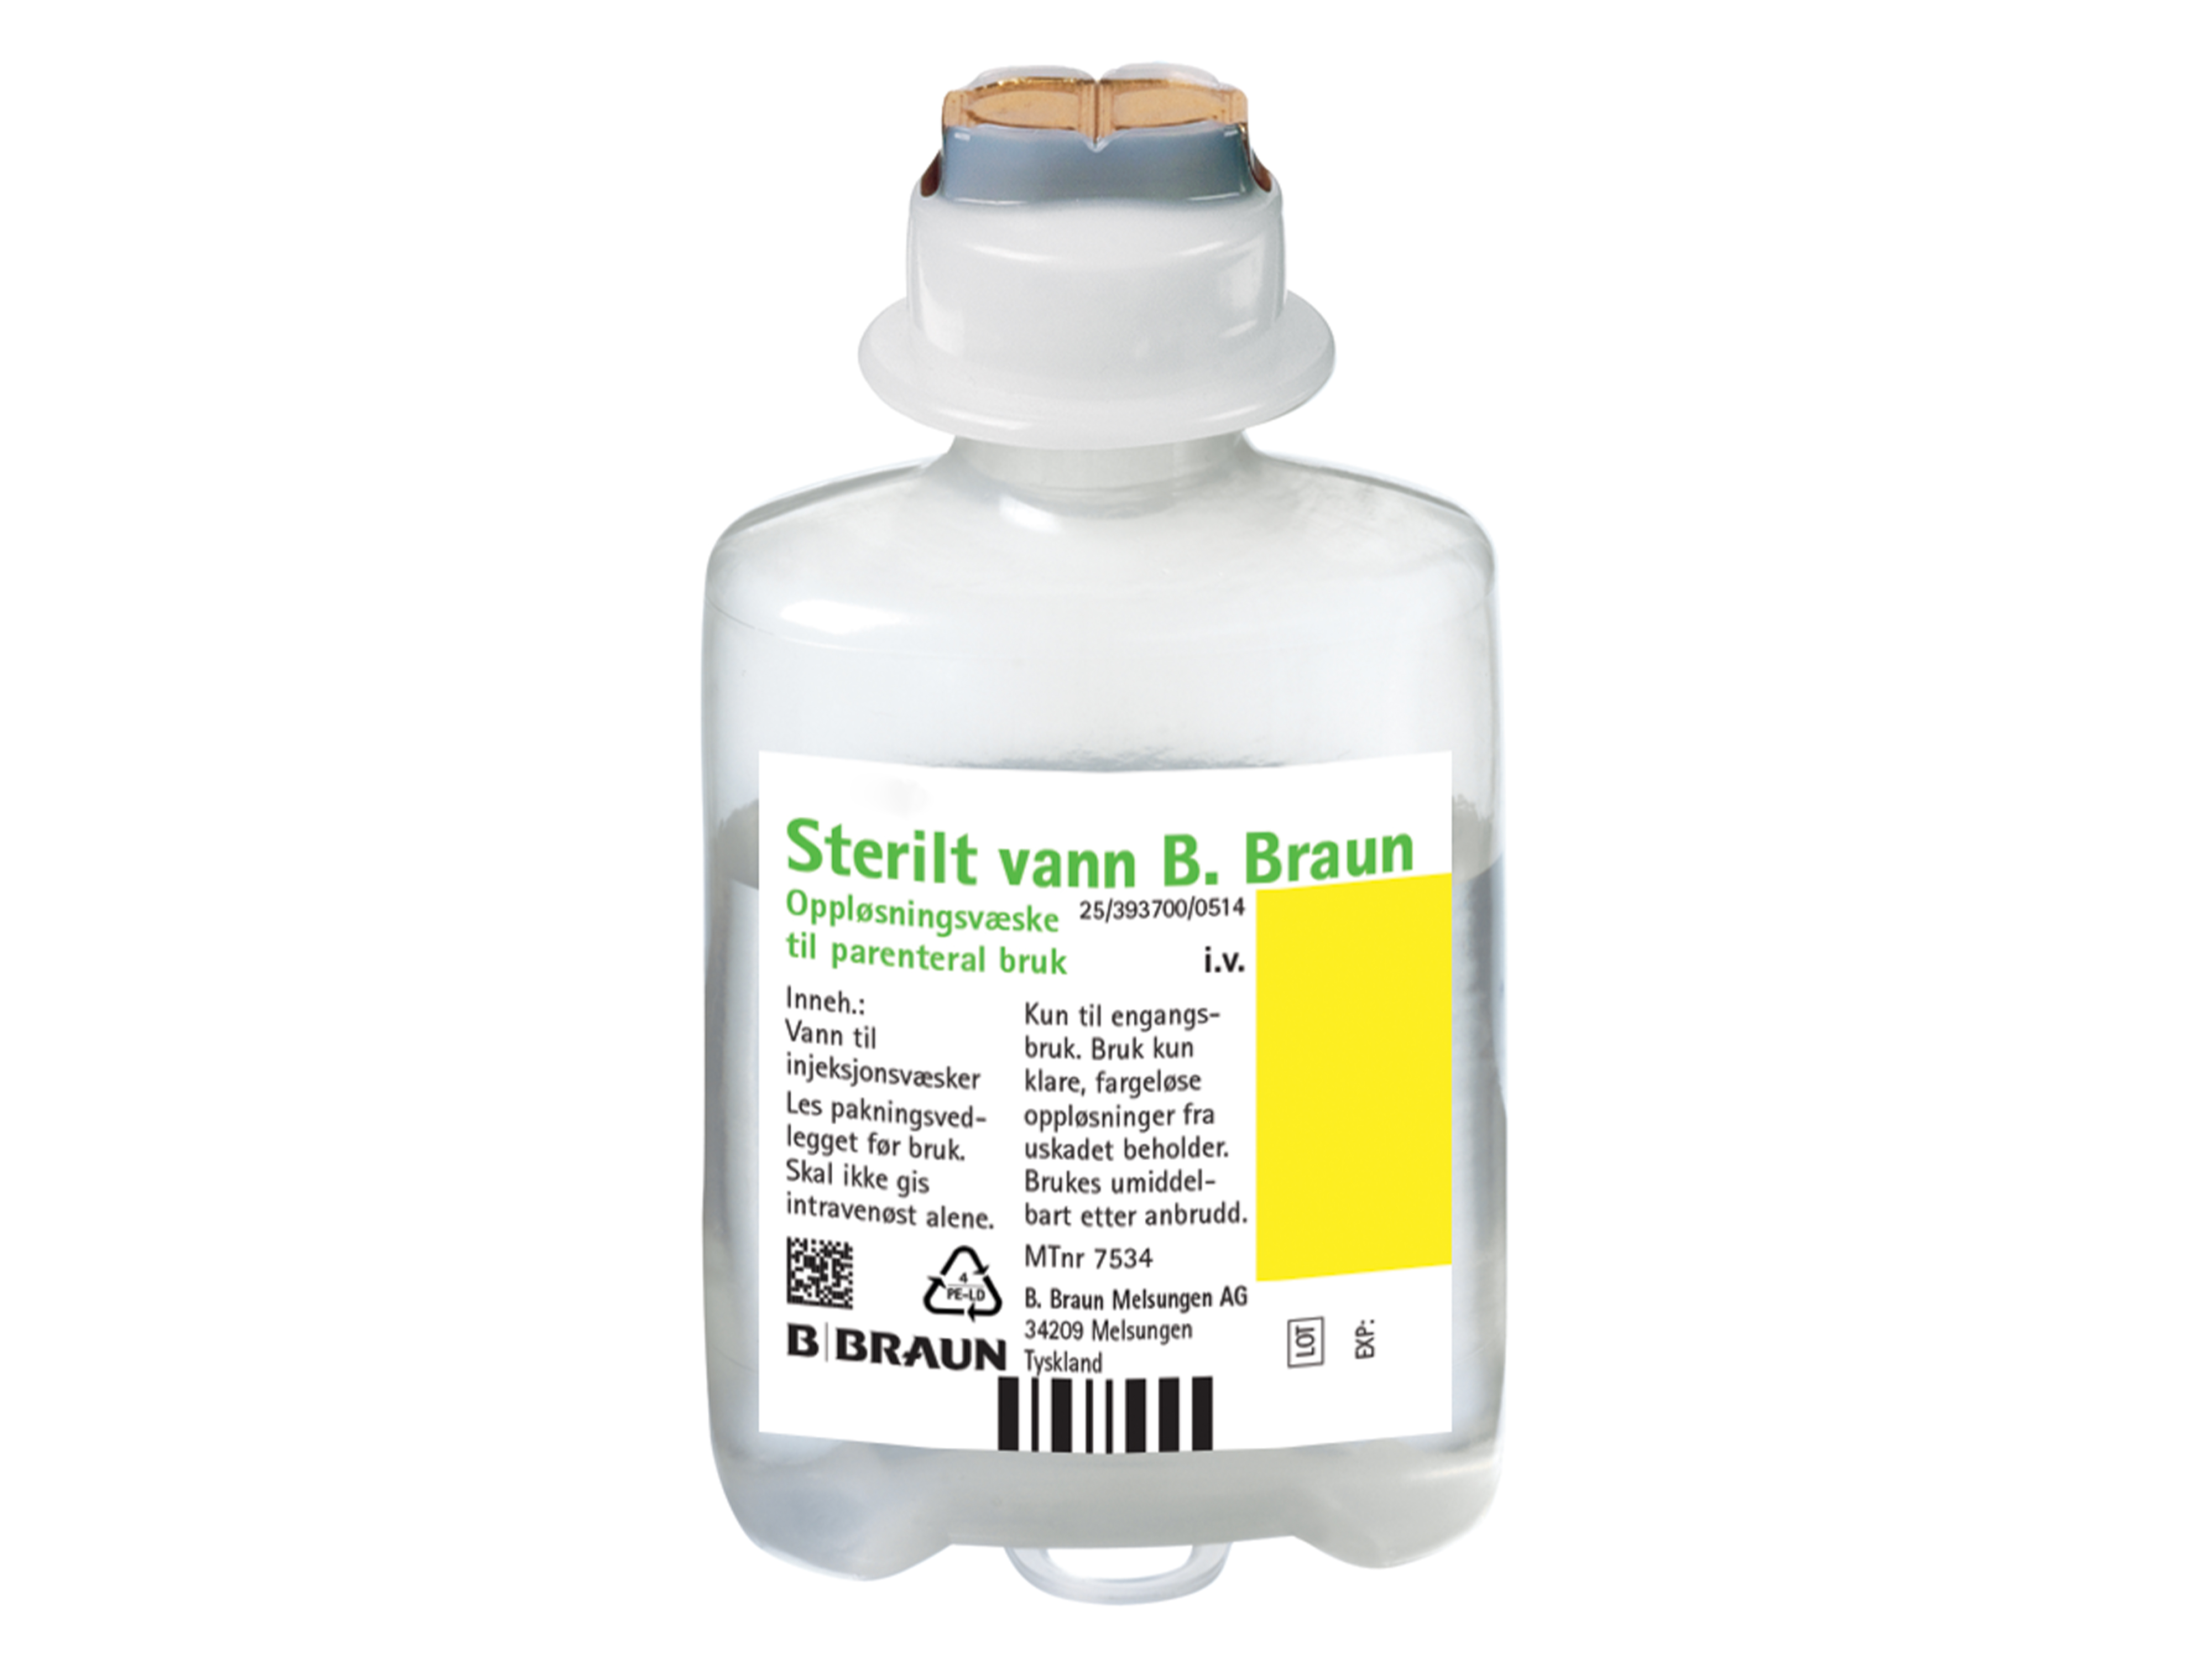 B. Braun Braun Sterilt vann (til injeksjon) ecoflac plus, 20 x 50 ml hetteglass